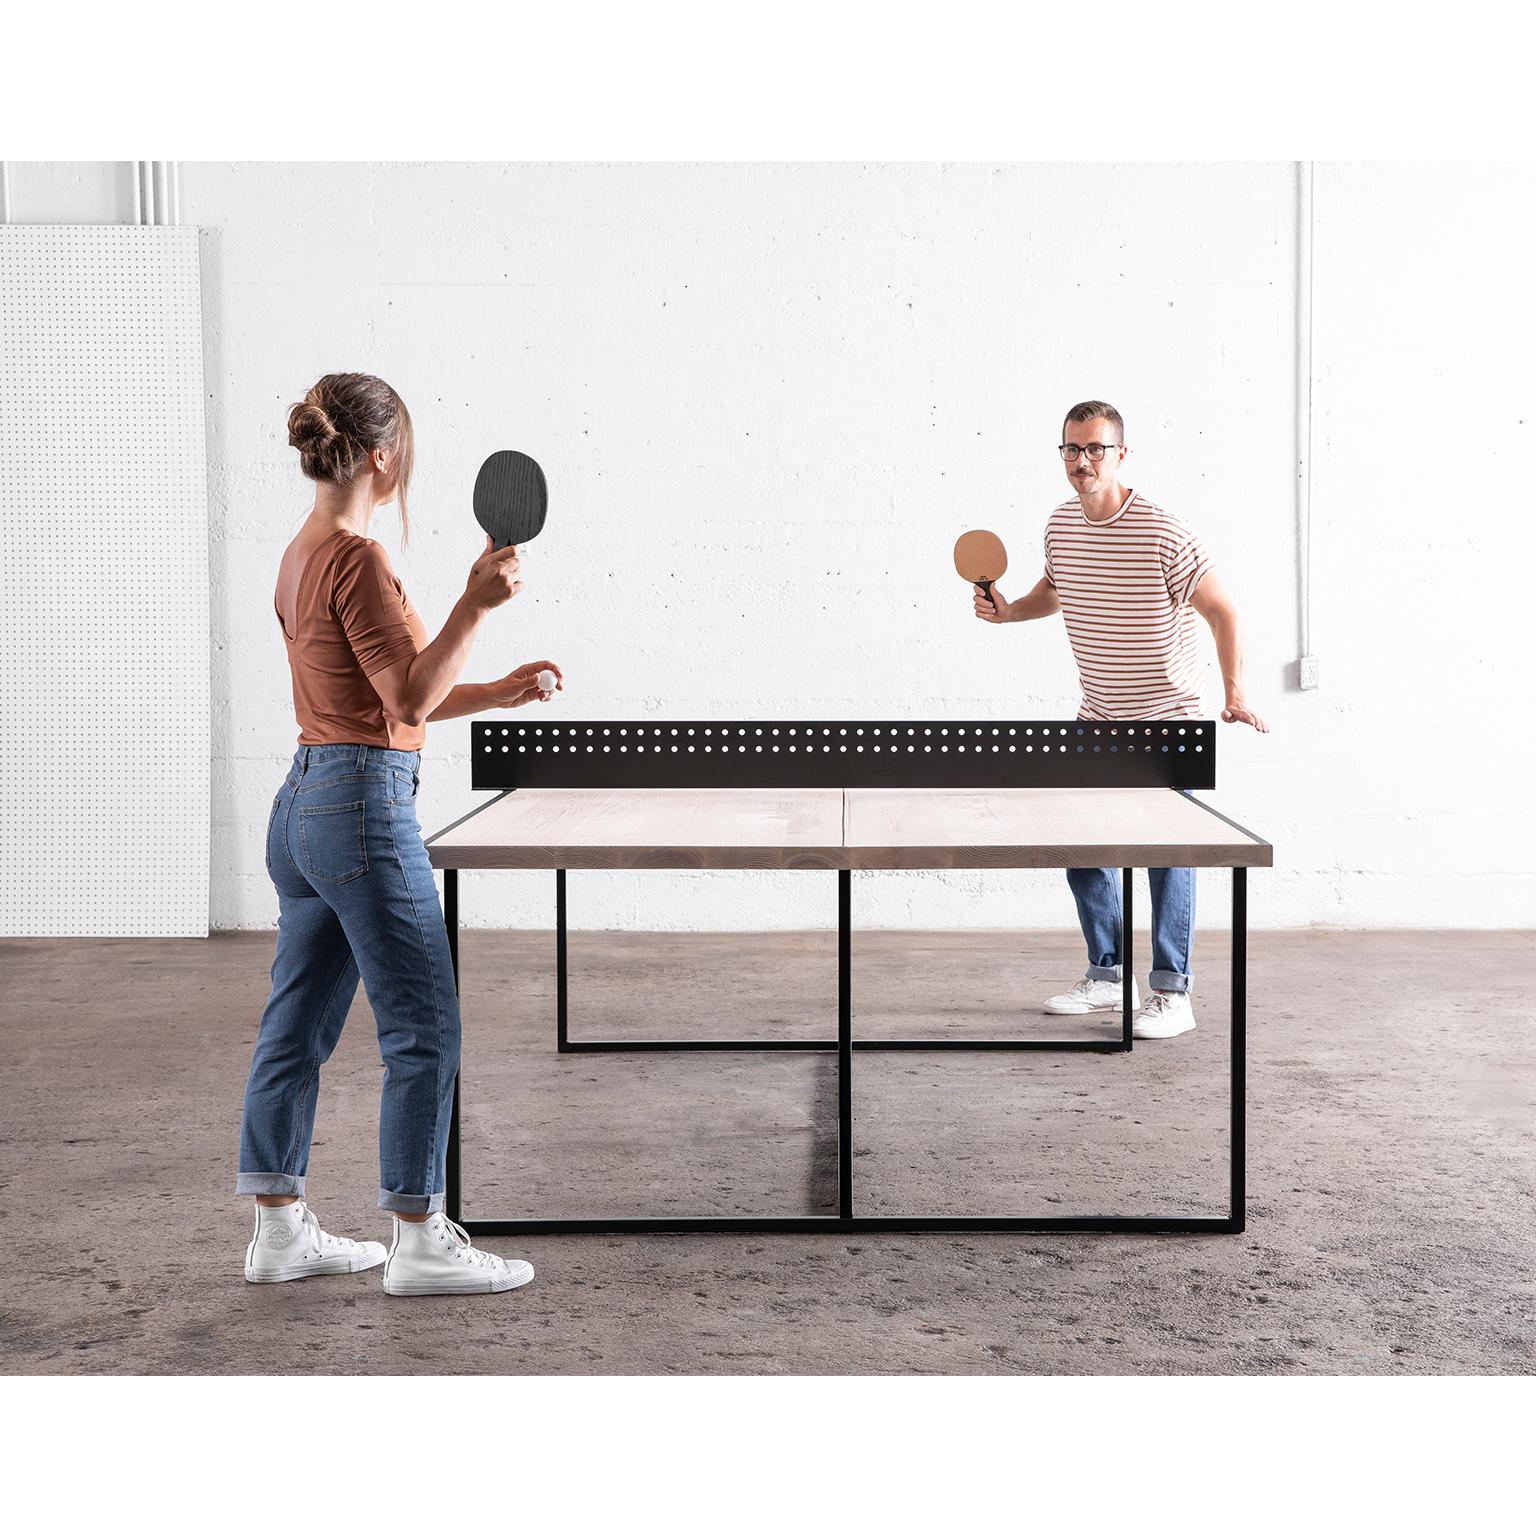 designer table tennis table